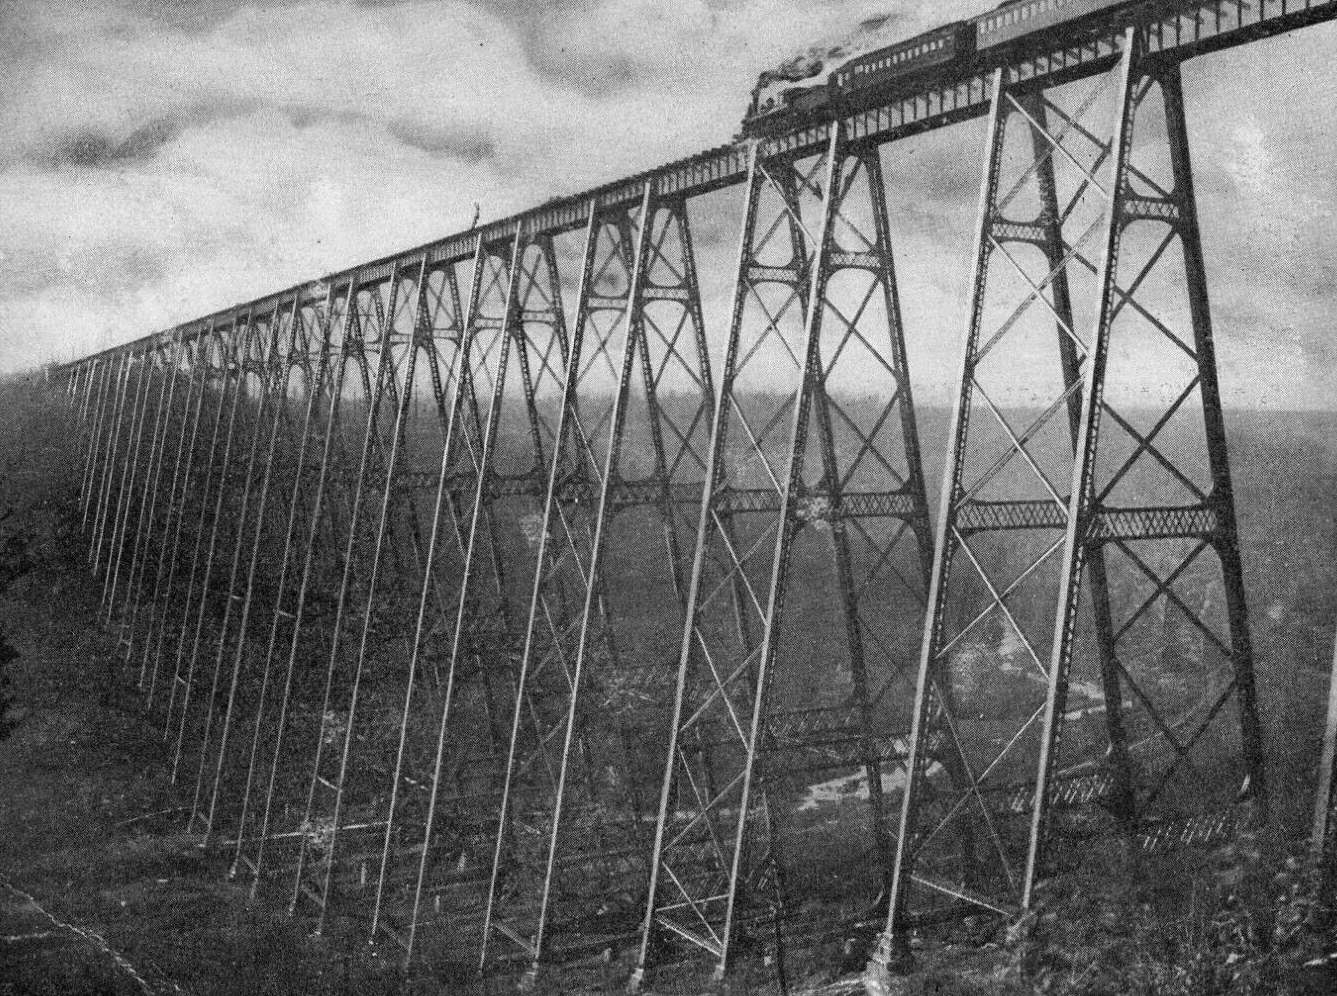 History of Kinzua Bridge